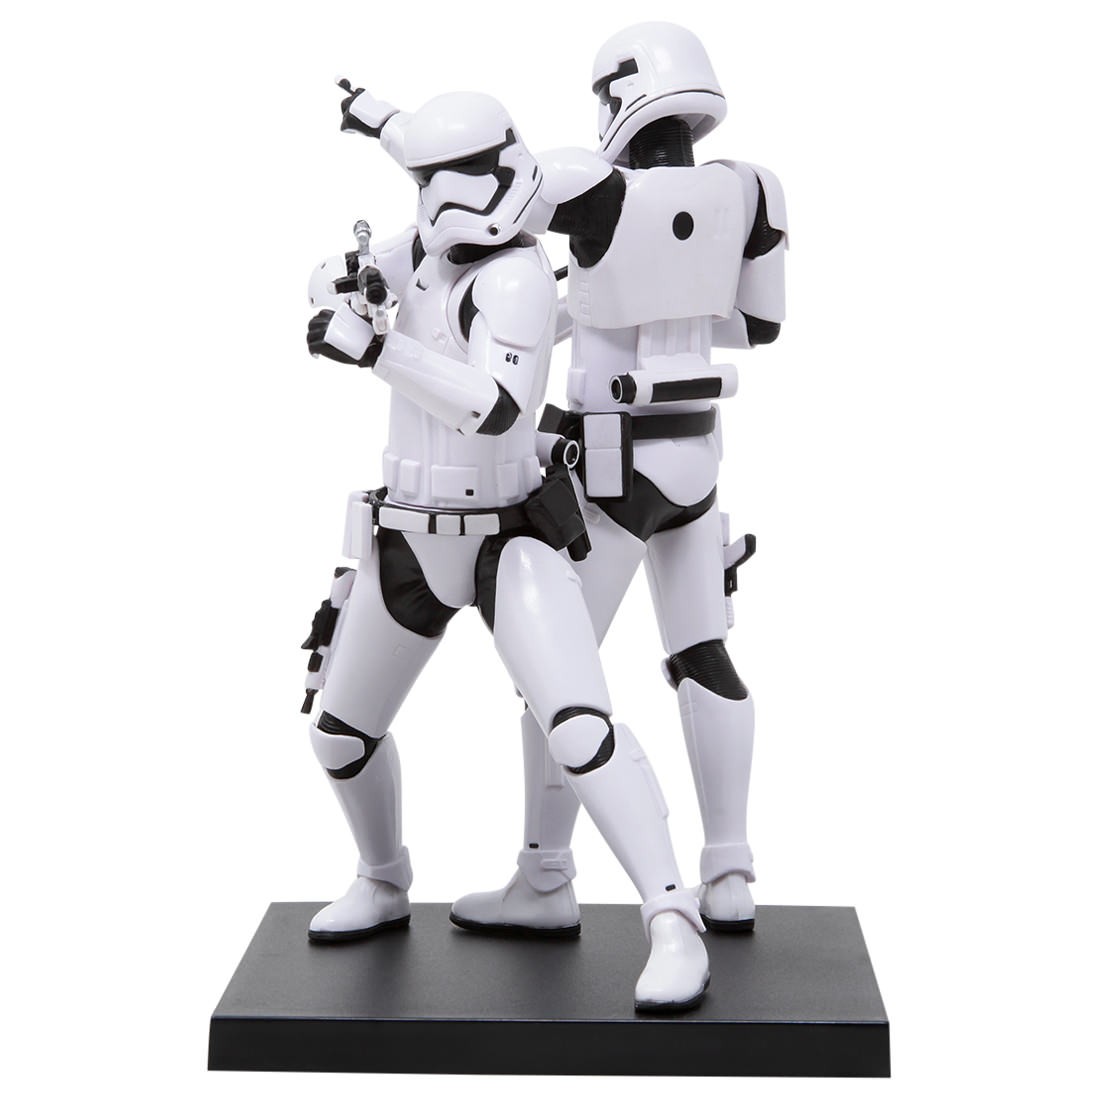 Kotobukiya ARTFX+ Star Wars The Force Awakens First Order Stormtrooper Two  Pack Statue (white)